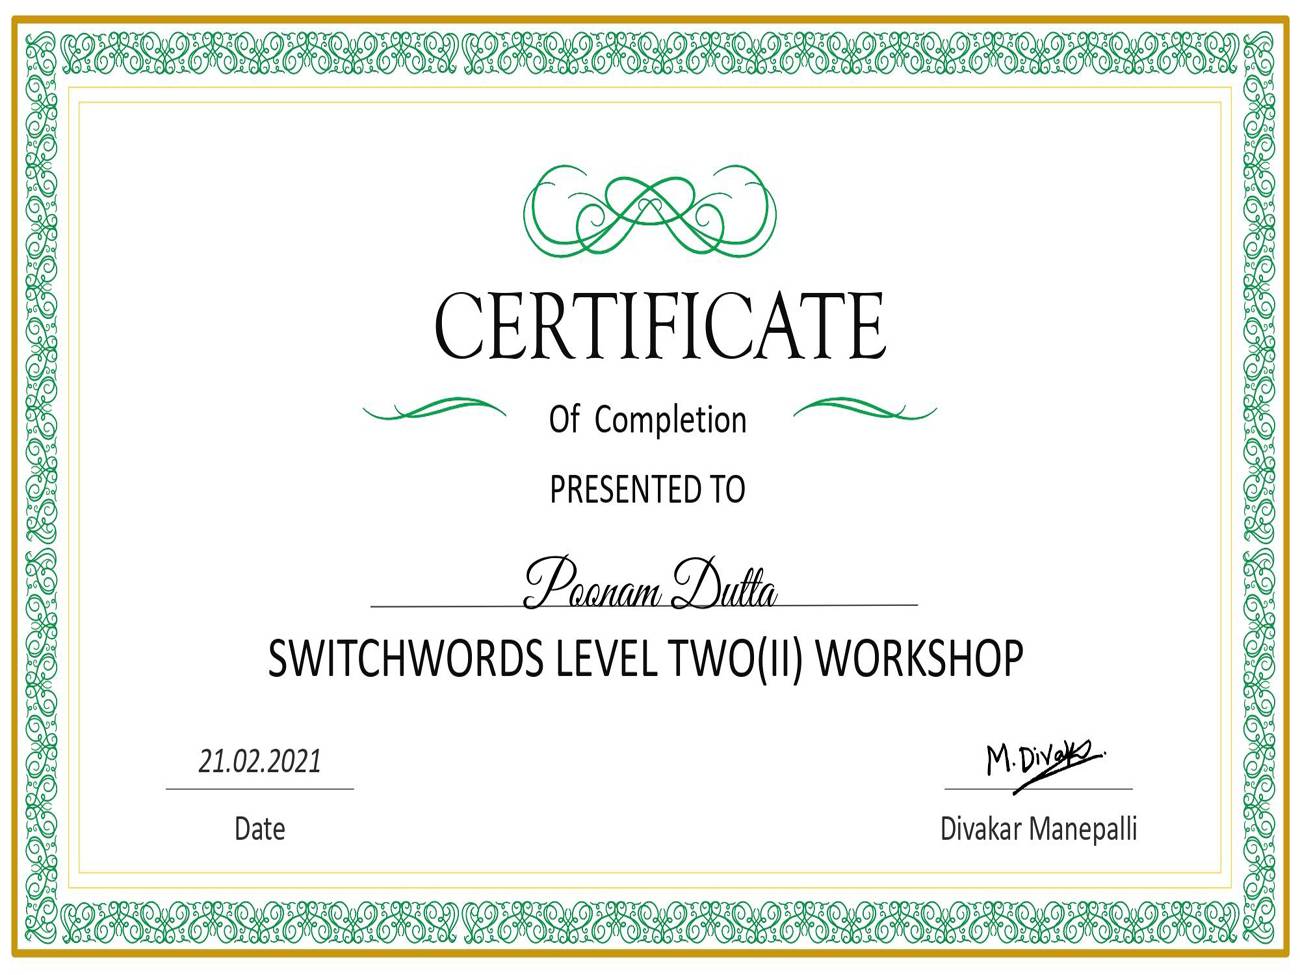 Poonam Dutta switchwords level one 2 workshop